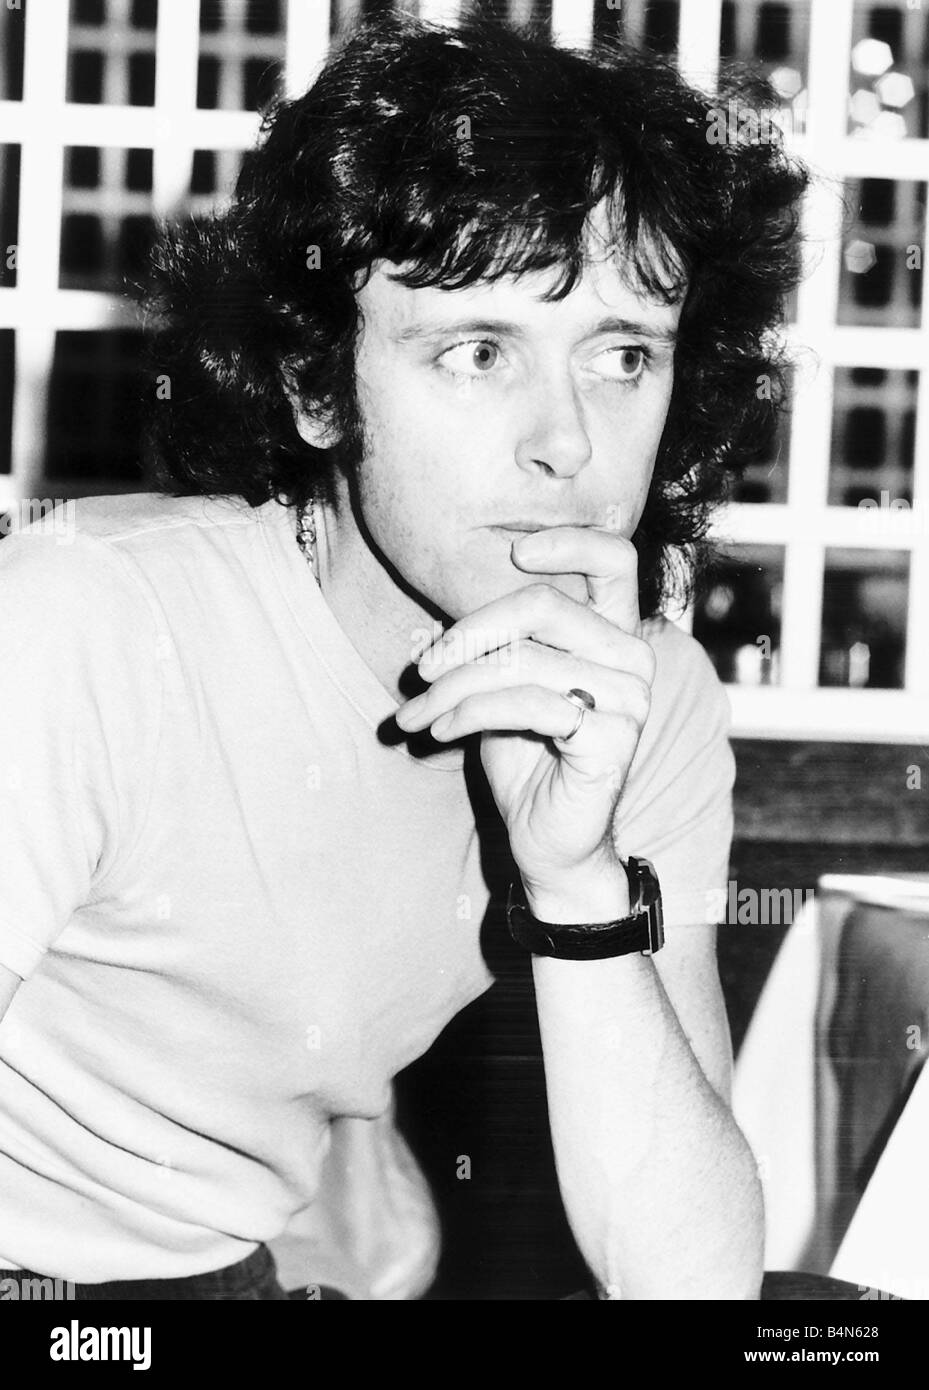 Donovan schottischen singer1977 Stockfoto